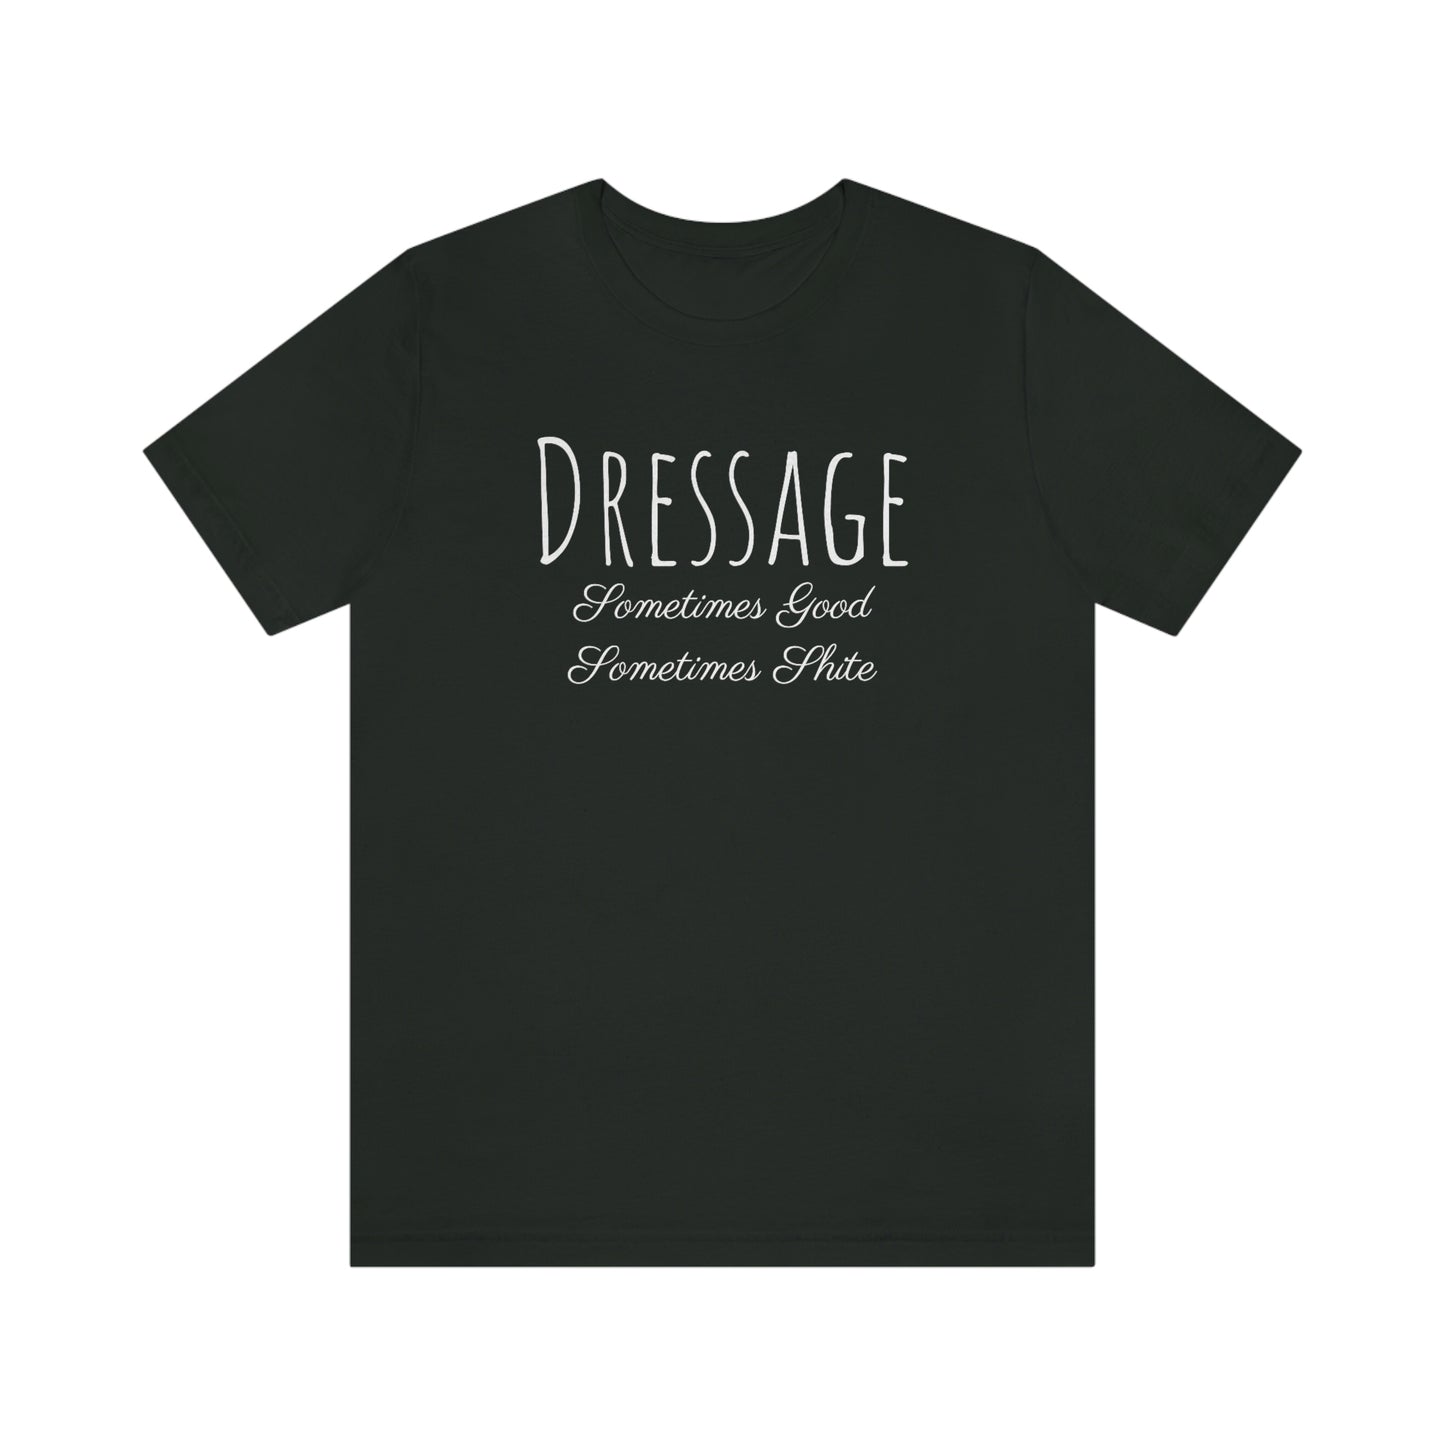 Shirt - Dressage - Sometimes Good, Sometimes Shite